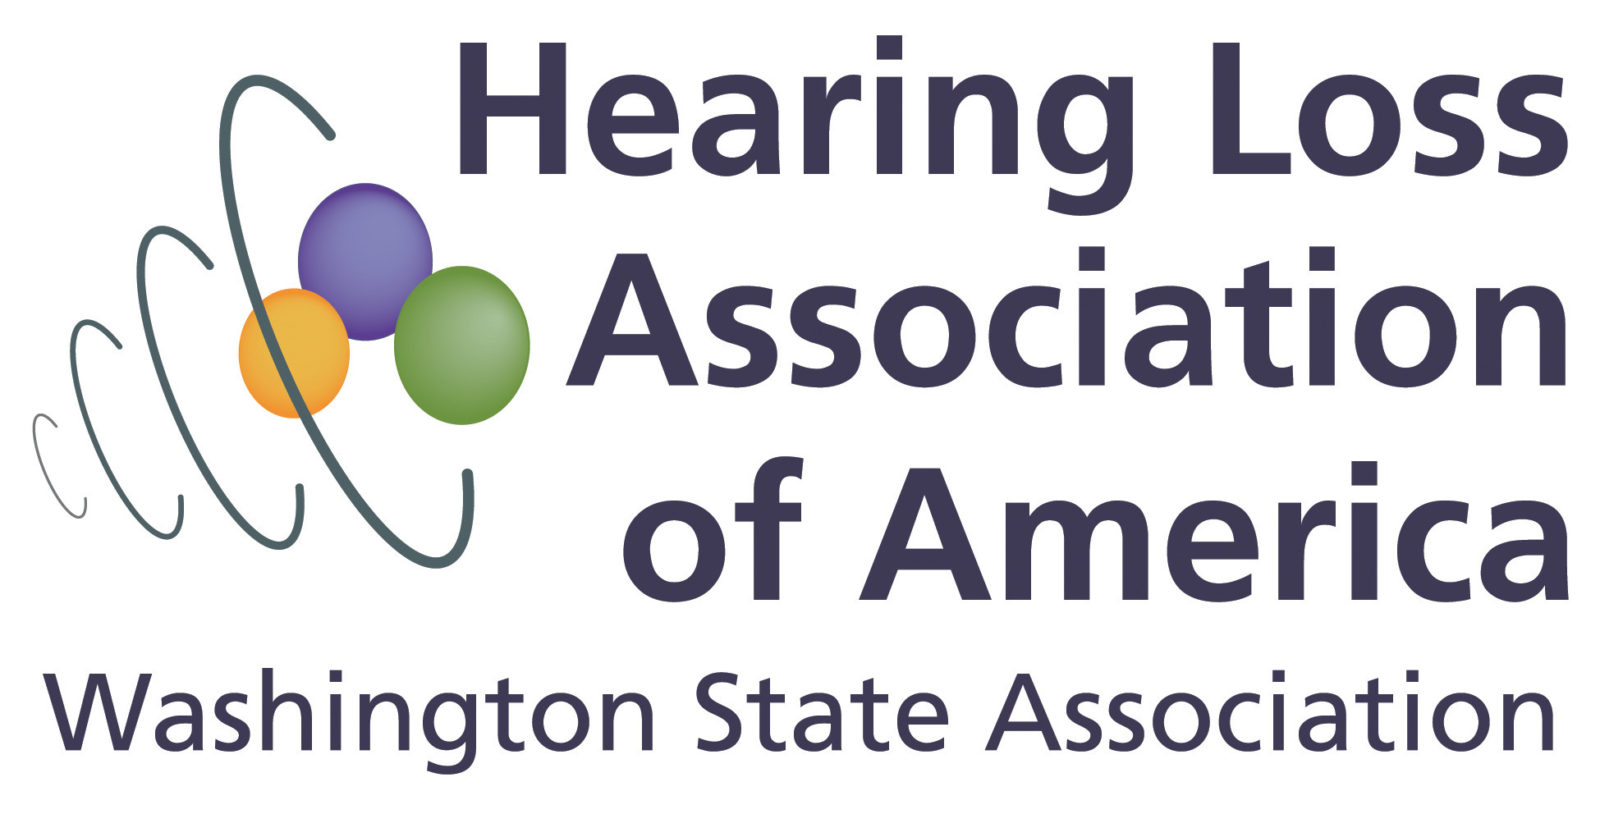 Hearing Loss Association of America Washington State Association logo